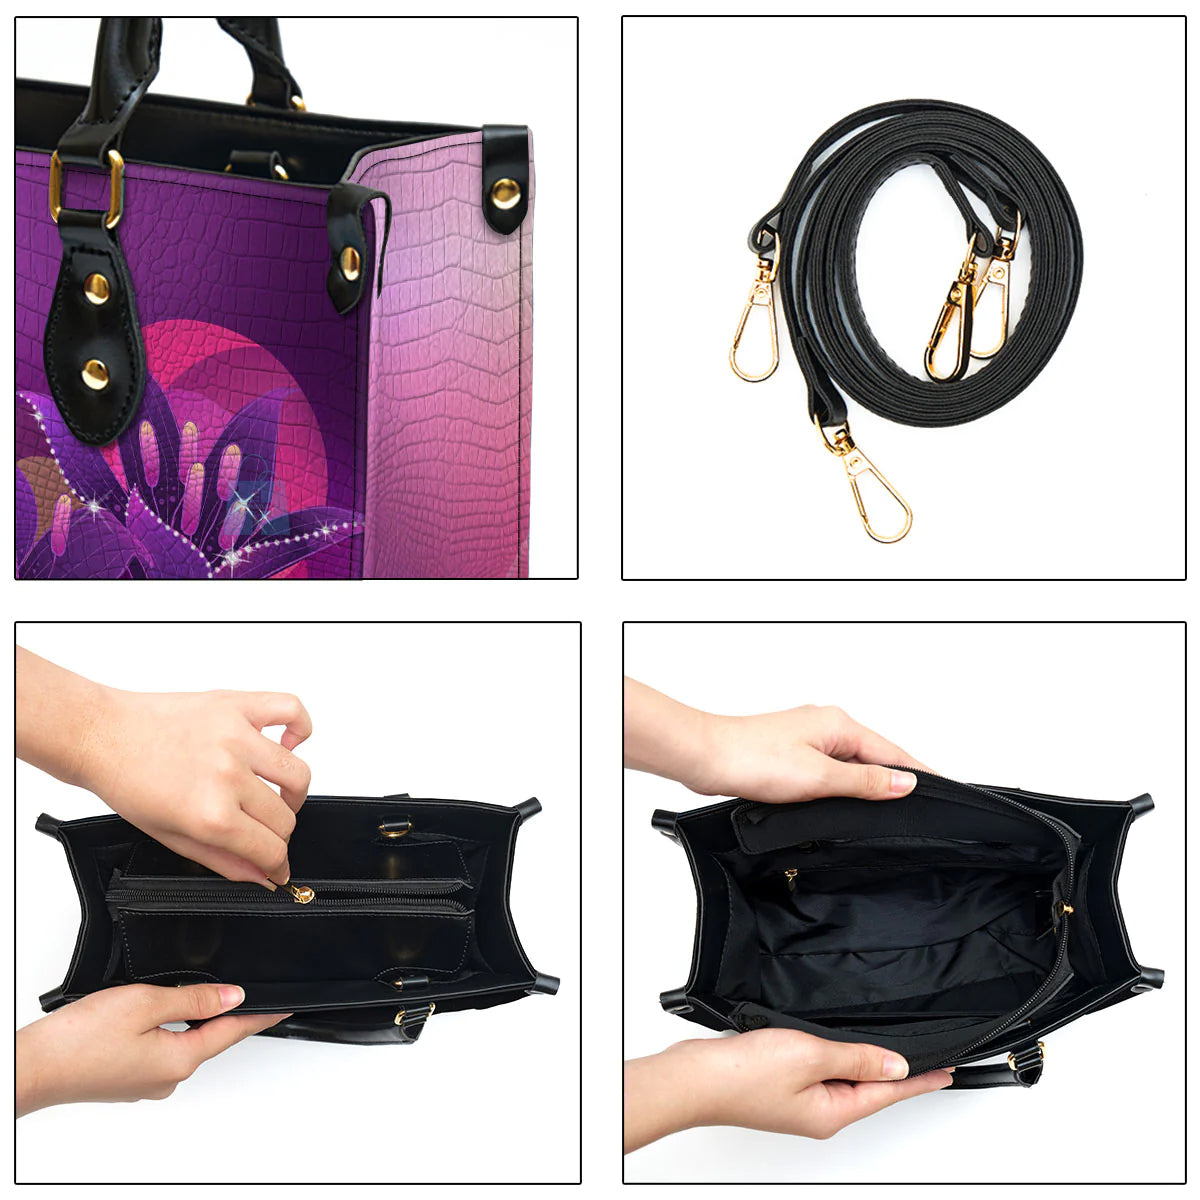 Christianart Designer Handbags, Faith, Hope, Love, Personalized Gifts, Gifts for Women, Christmas Gift. - Christian Art Bag